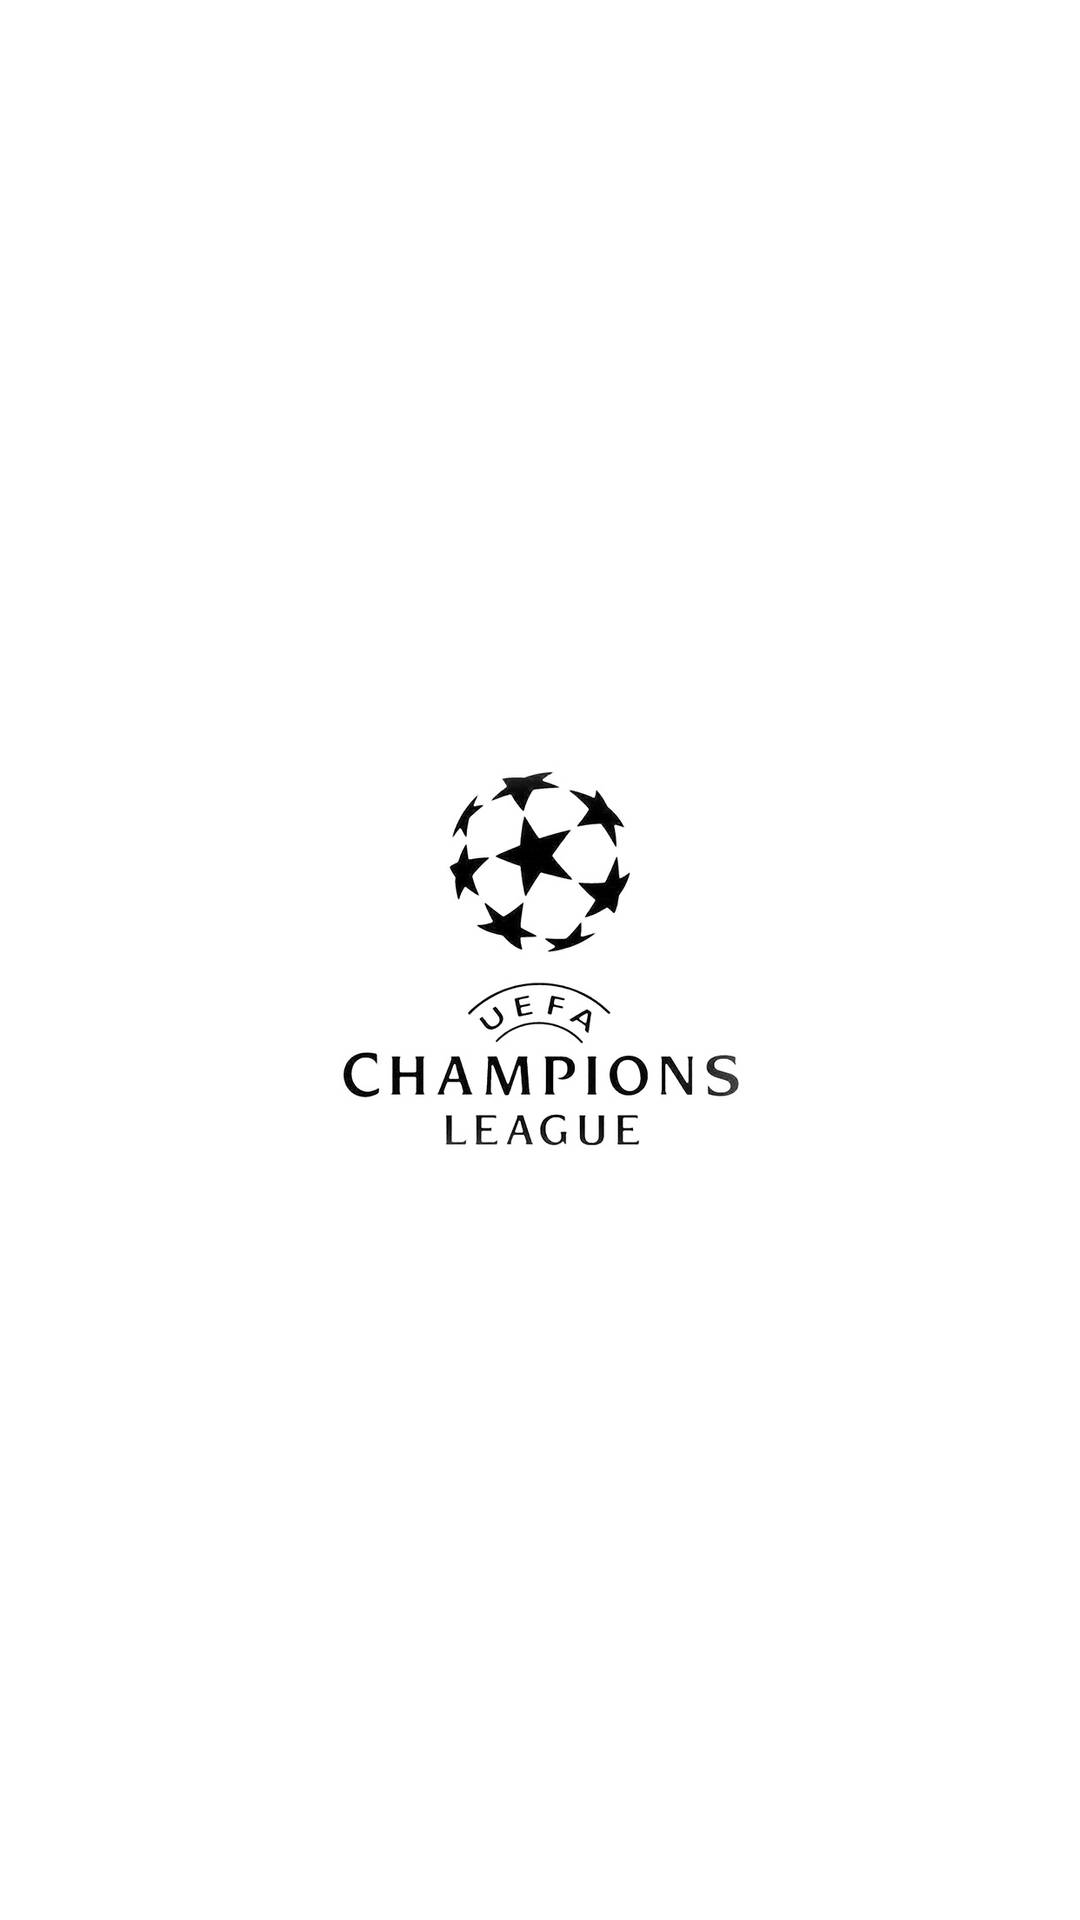 Enkeluefa Champions League-logo. Wallpaper